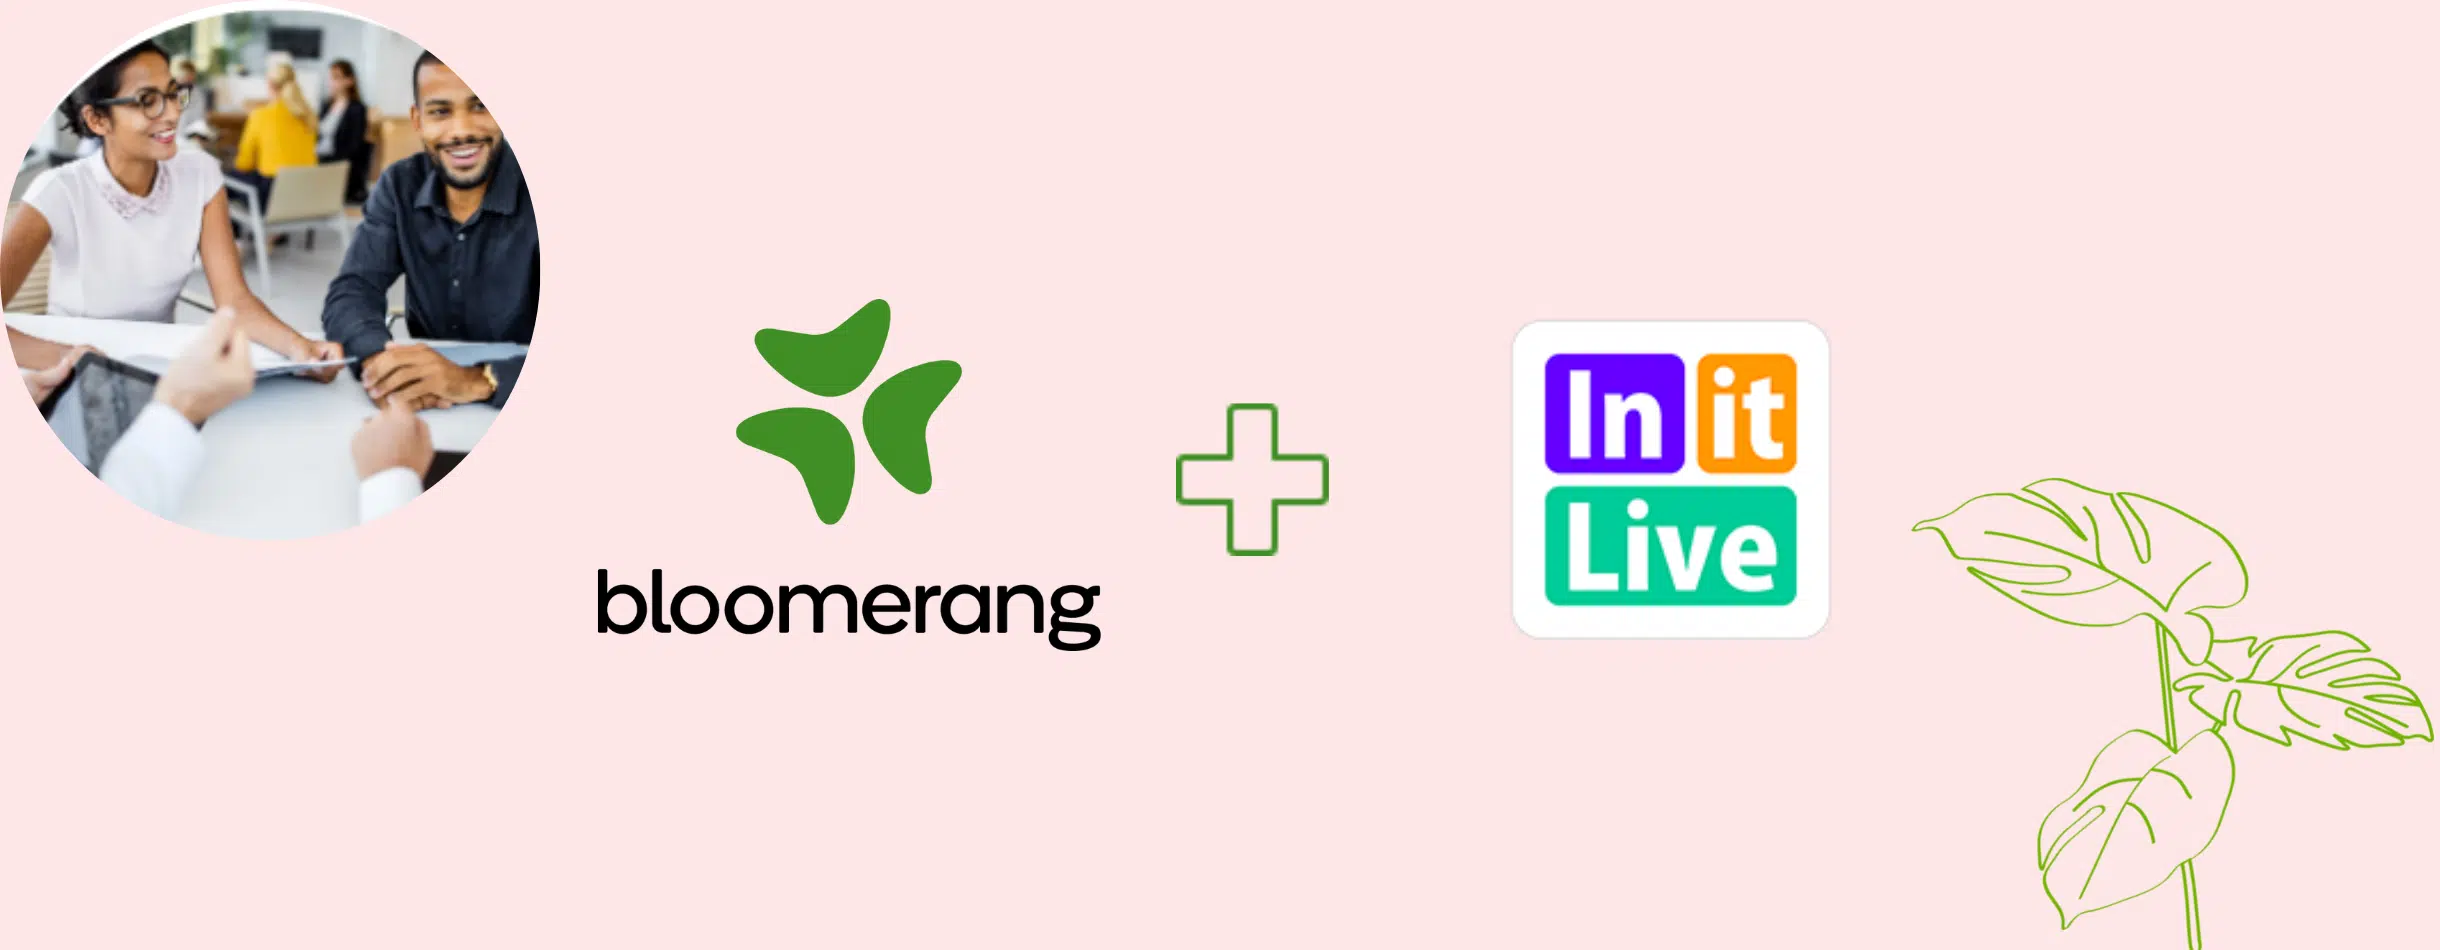 Bloomerang Acquires InitLive to Help Nonprofits Strengthen their Volunteer Management Programs